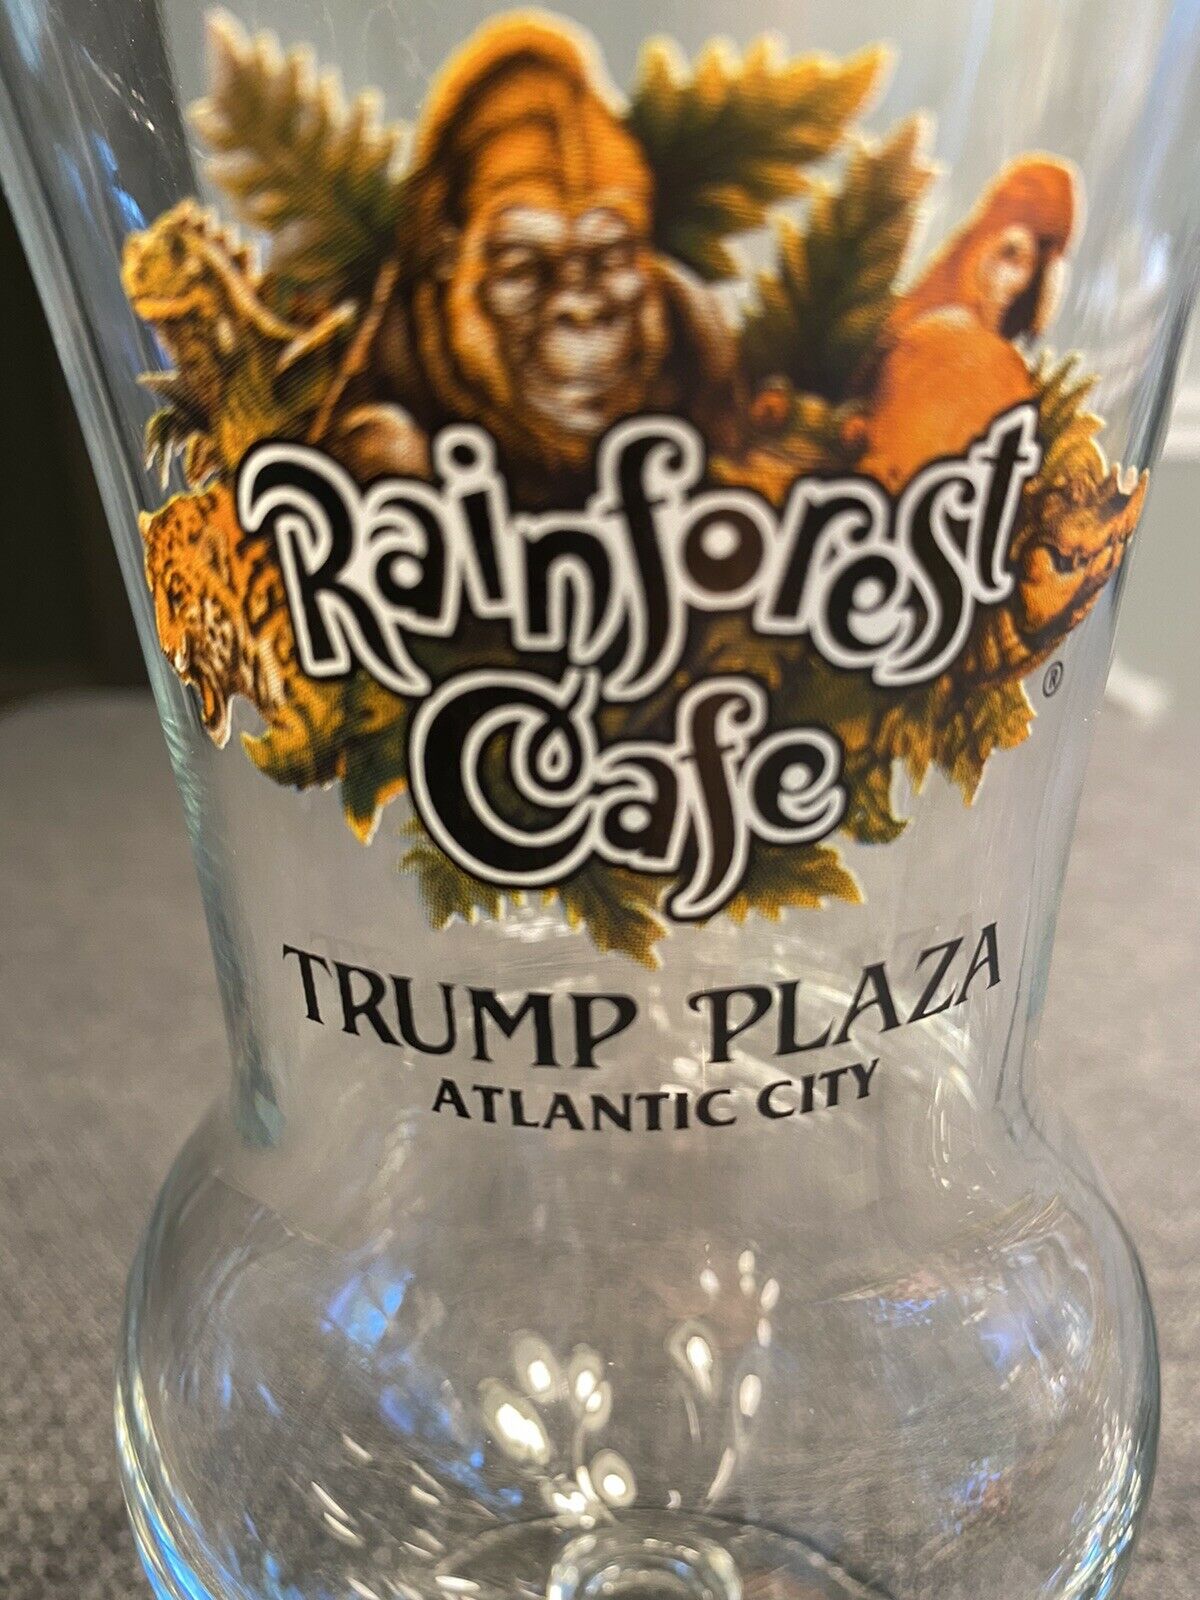 Rainforest Cafe “trump Plaza - Atlantic City” Hurricane Glass - Set Of 2